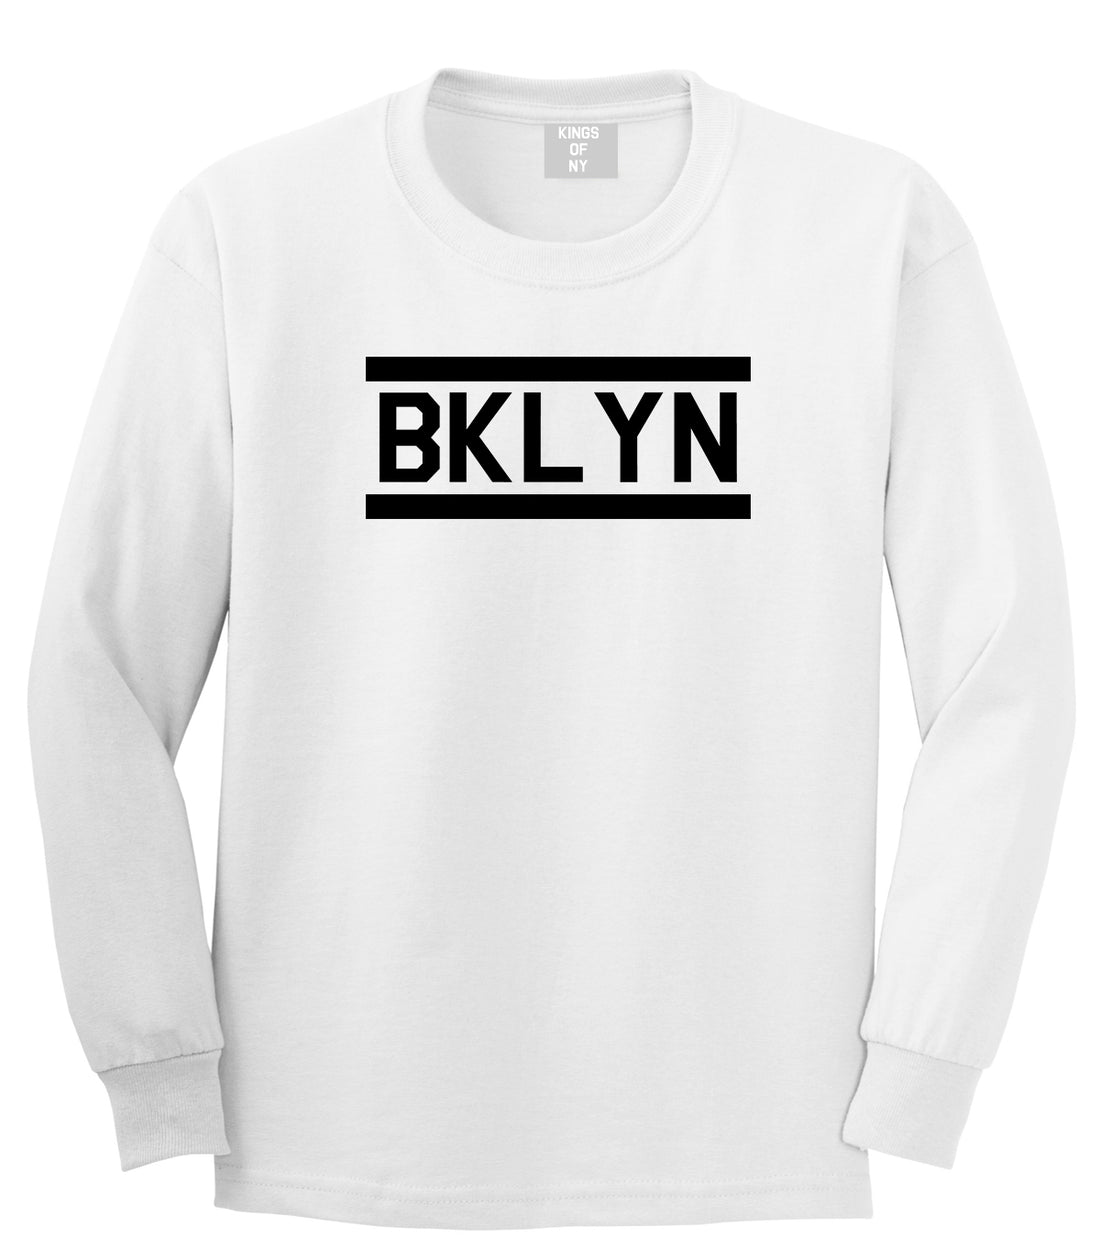 BKLYN Brooklyn Mens Long Sleeve T-Shirt White by Kings Of NY